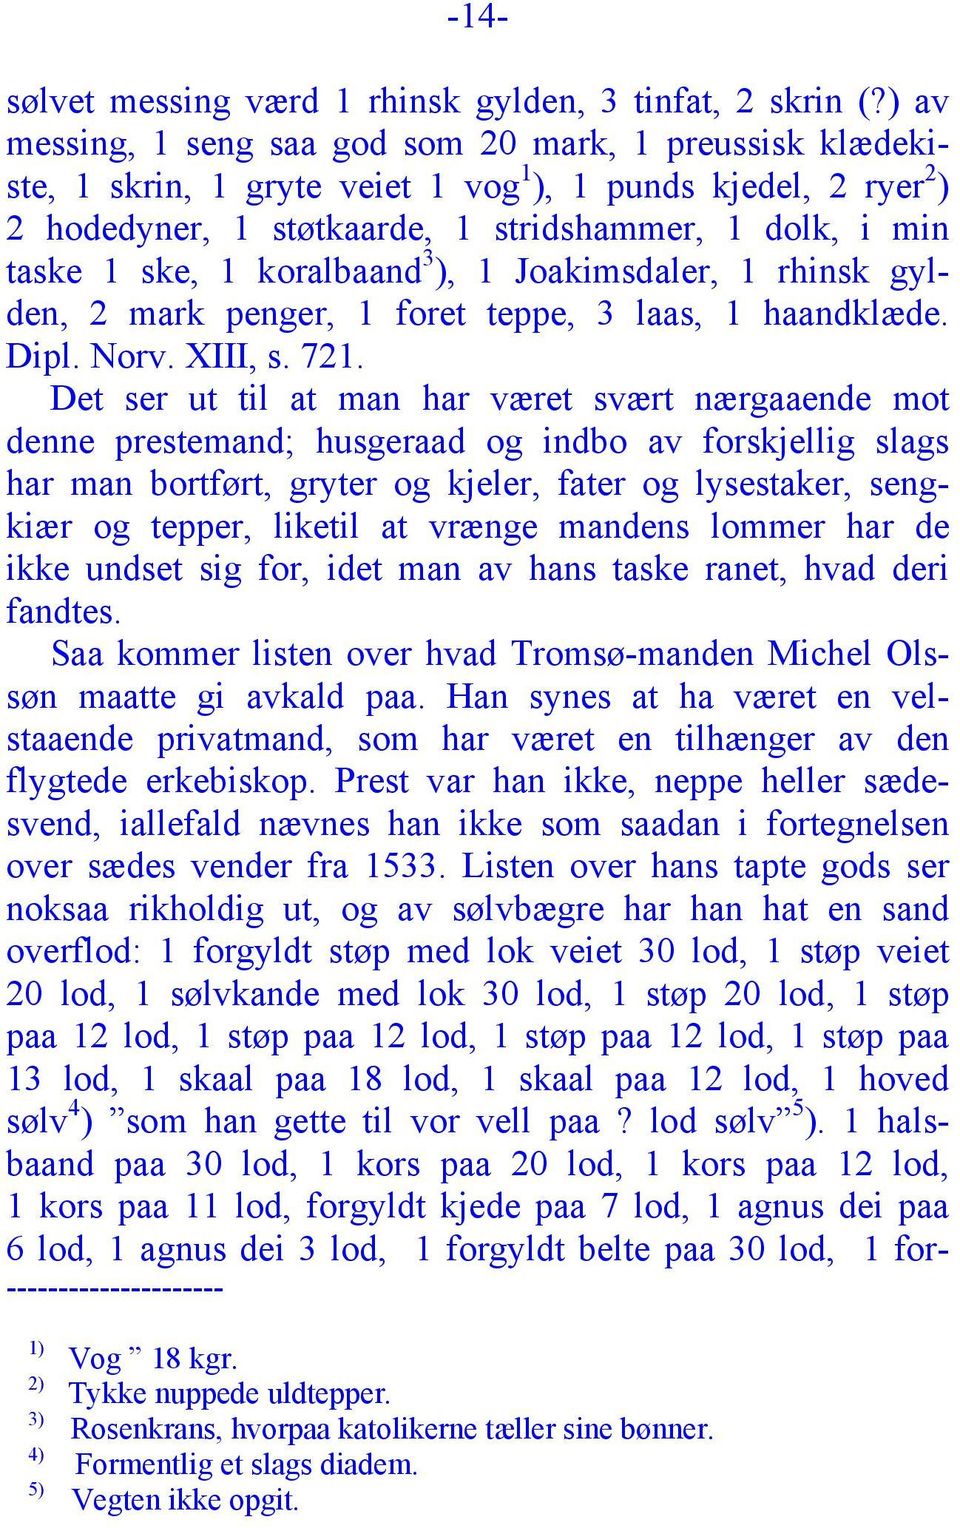 koralbaand 3 ), 1 Joakimsdaler, 1 rhinsk gylden, 2 mark penger, 1 foret teppe, 3 laas, 1 haandklæde. Dipl. Norv. XIII, s. 721.